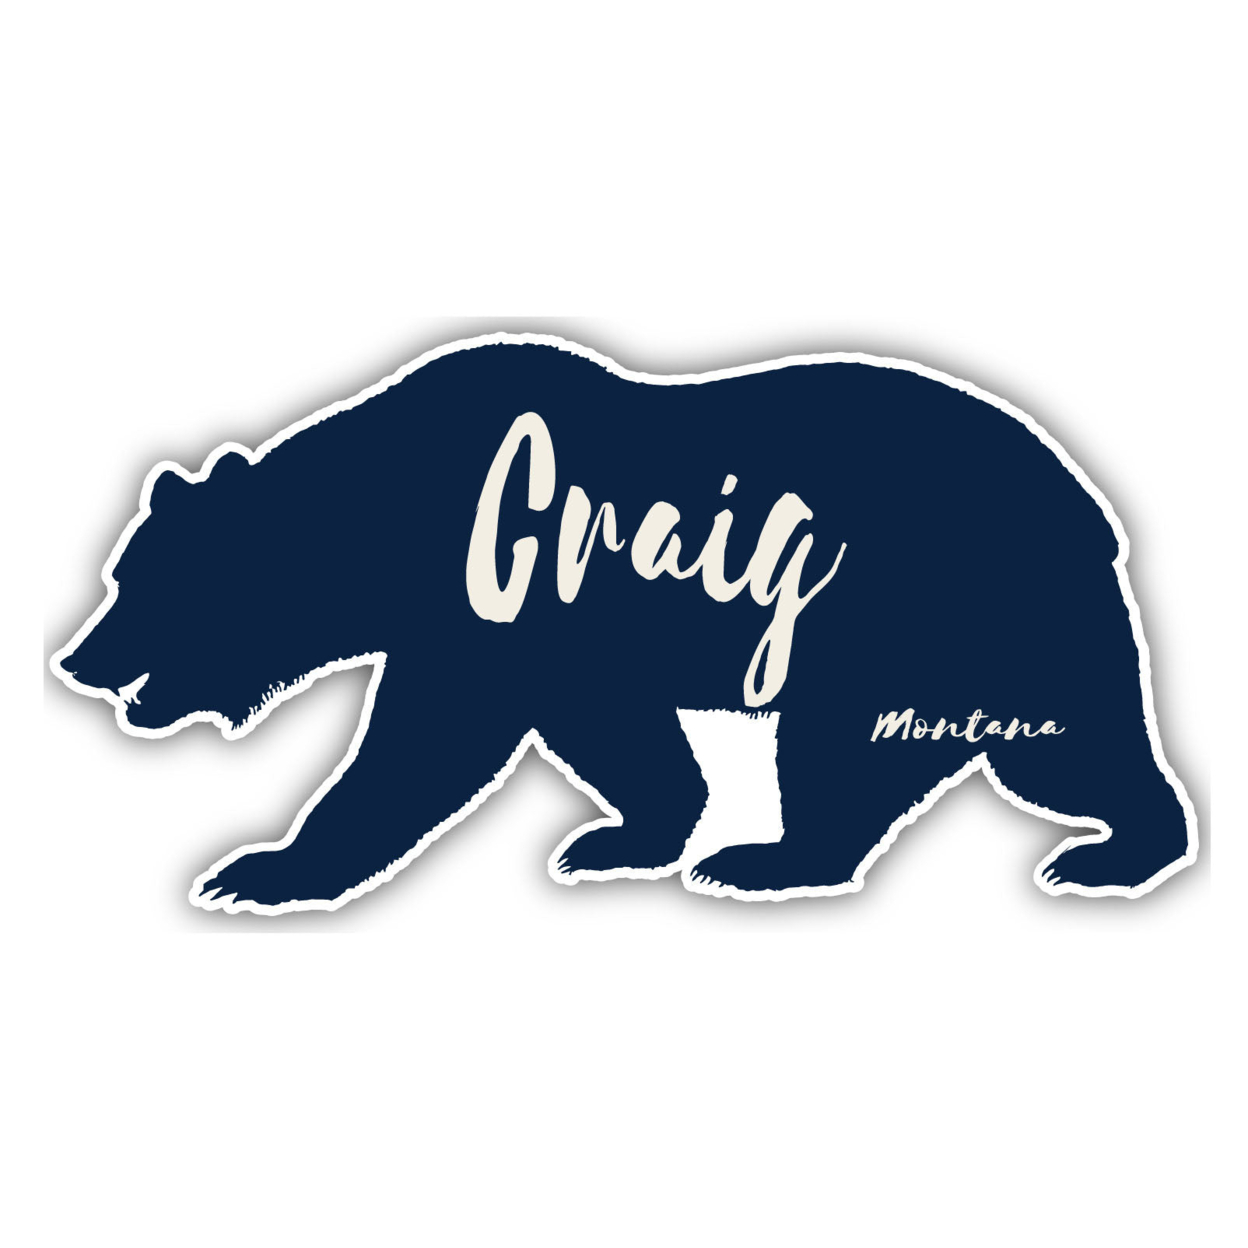 Craig Montana Souvenir Decorative Stickers (Choose Theme And Size) - 4-Pack, 8-Inch, Bear